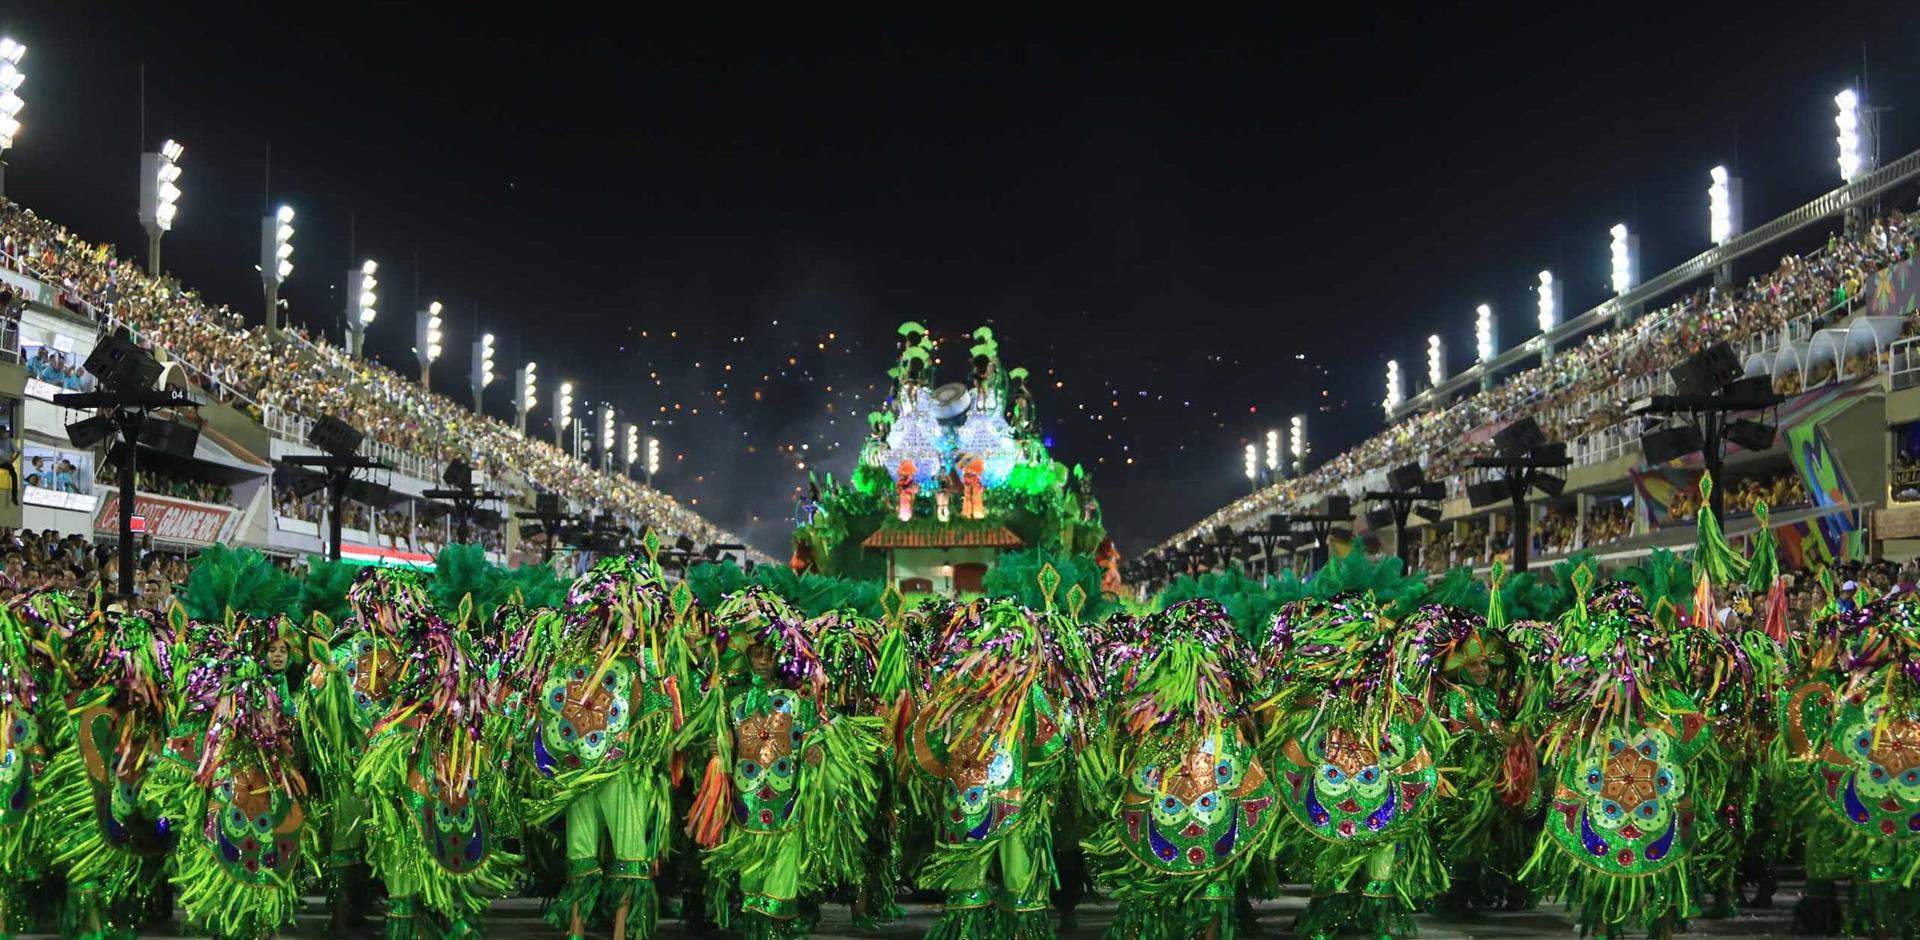 Exclusive access to Rio Carnival